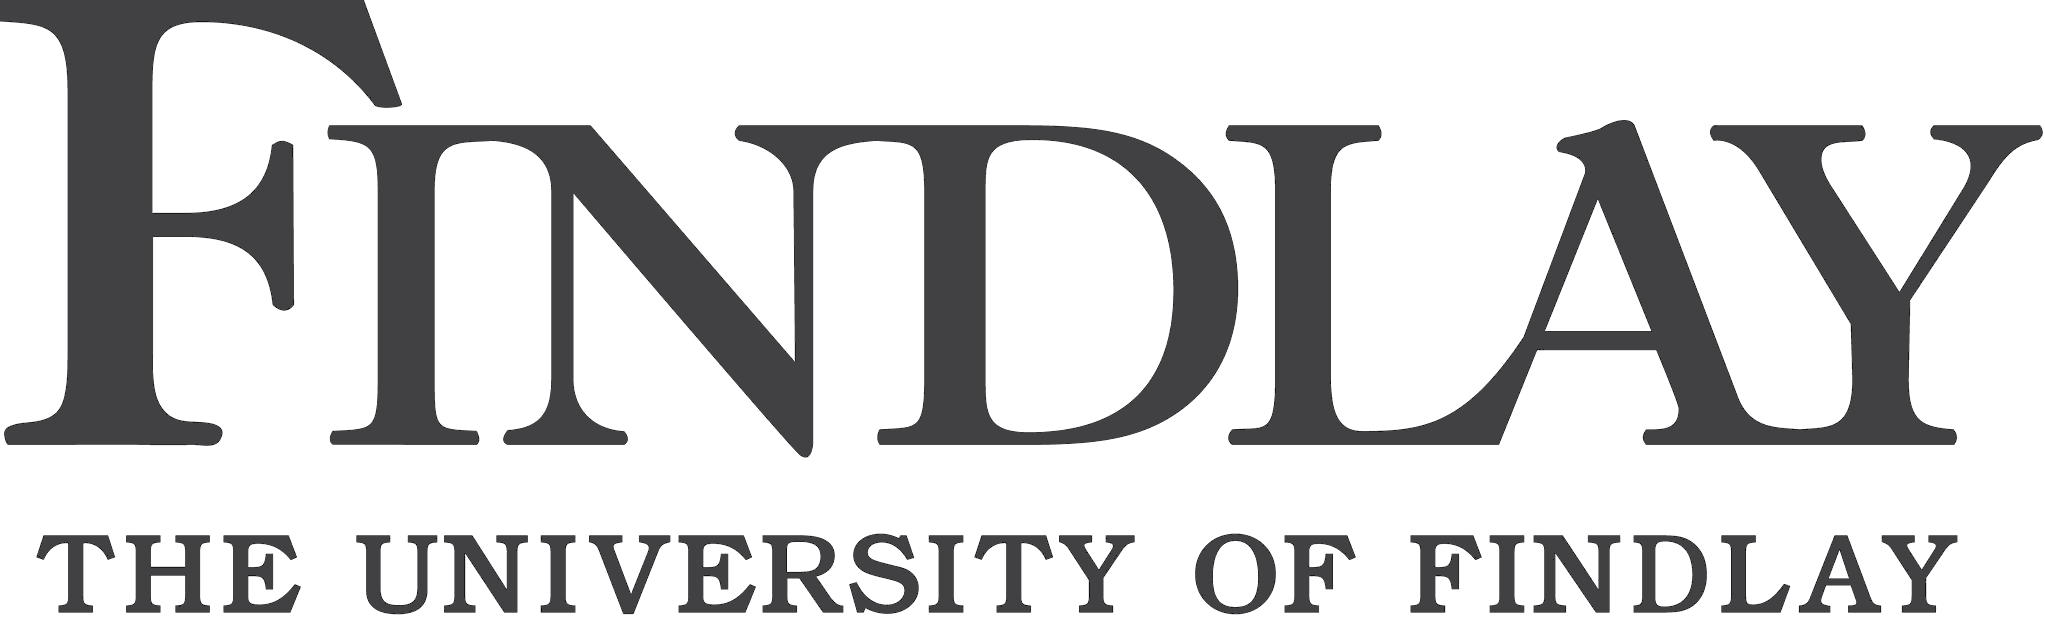 Findlay Logo - University of Findlay logo.png